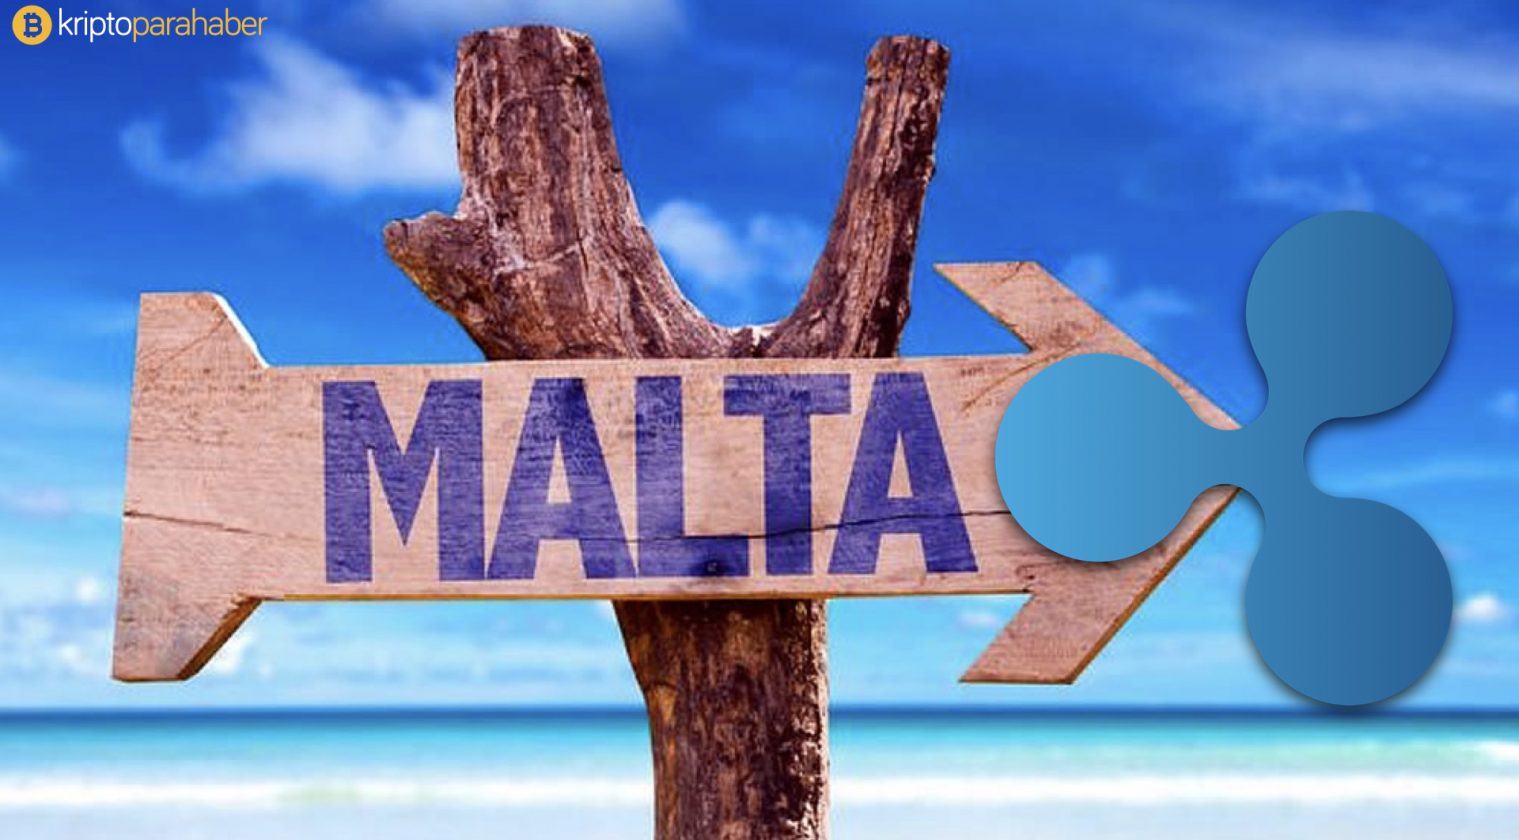 Ripple ticaretinde lider ülke artık Malta.